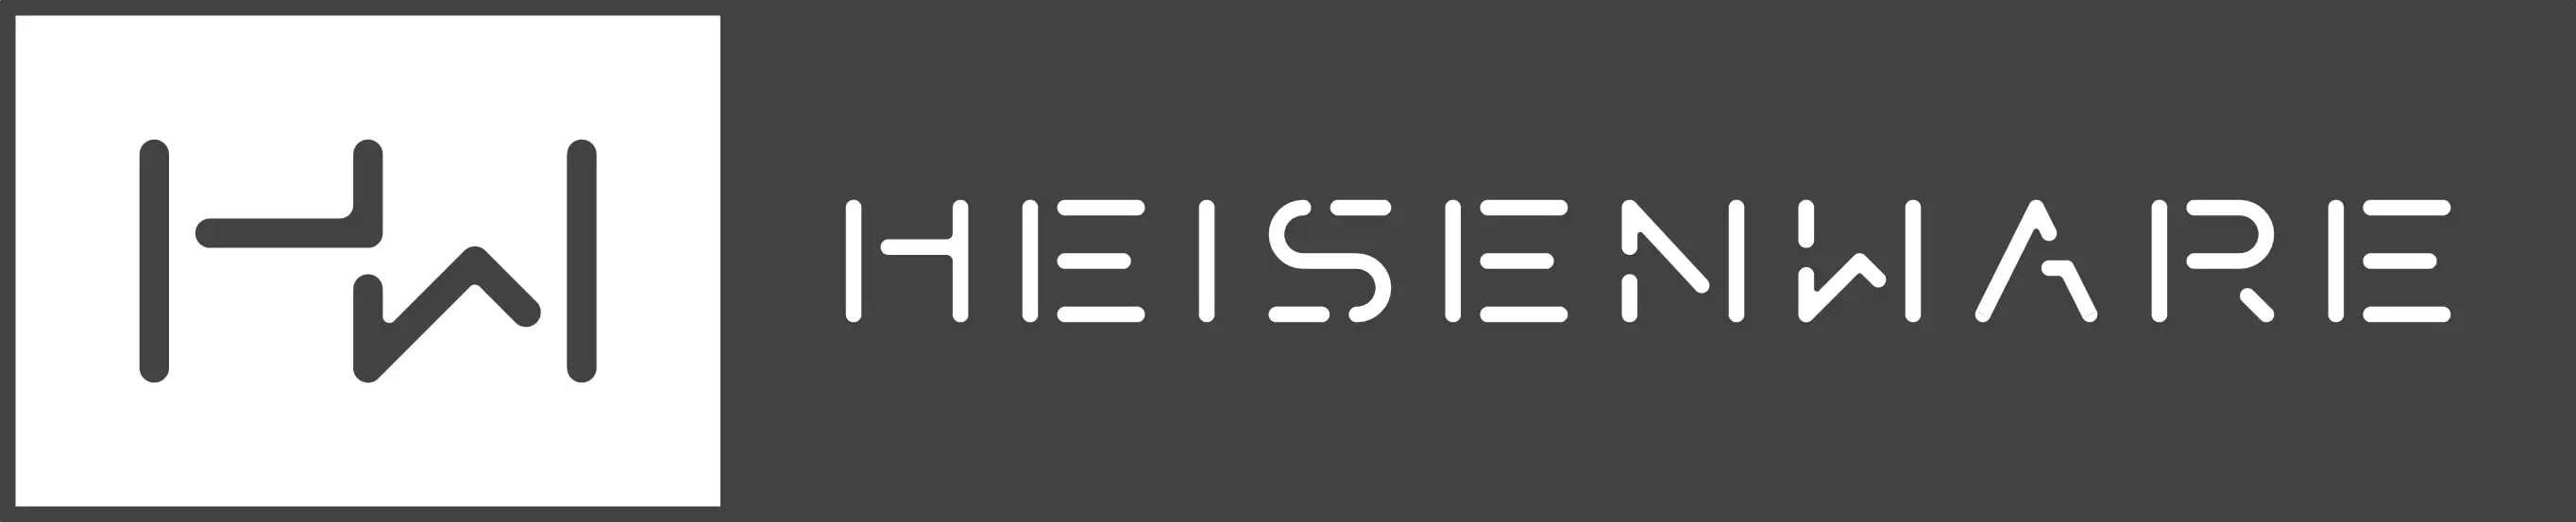 heisenware logo